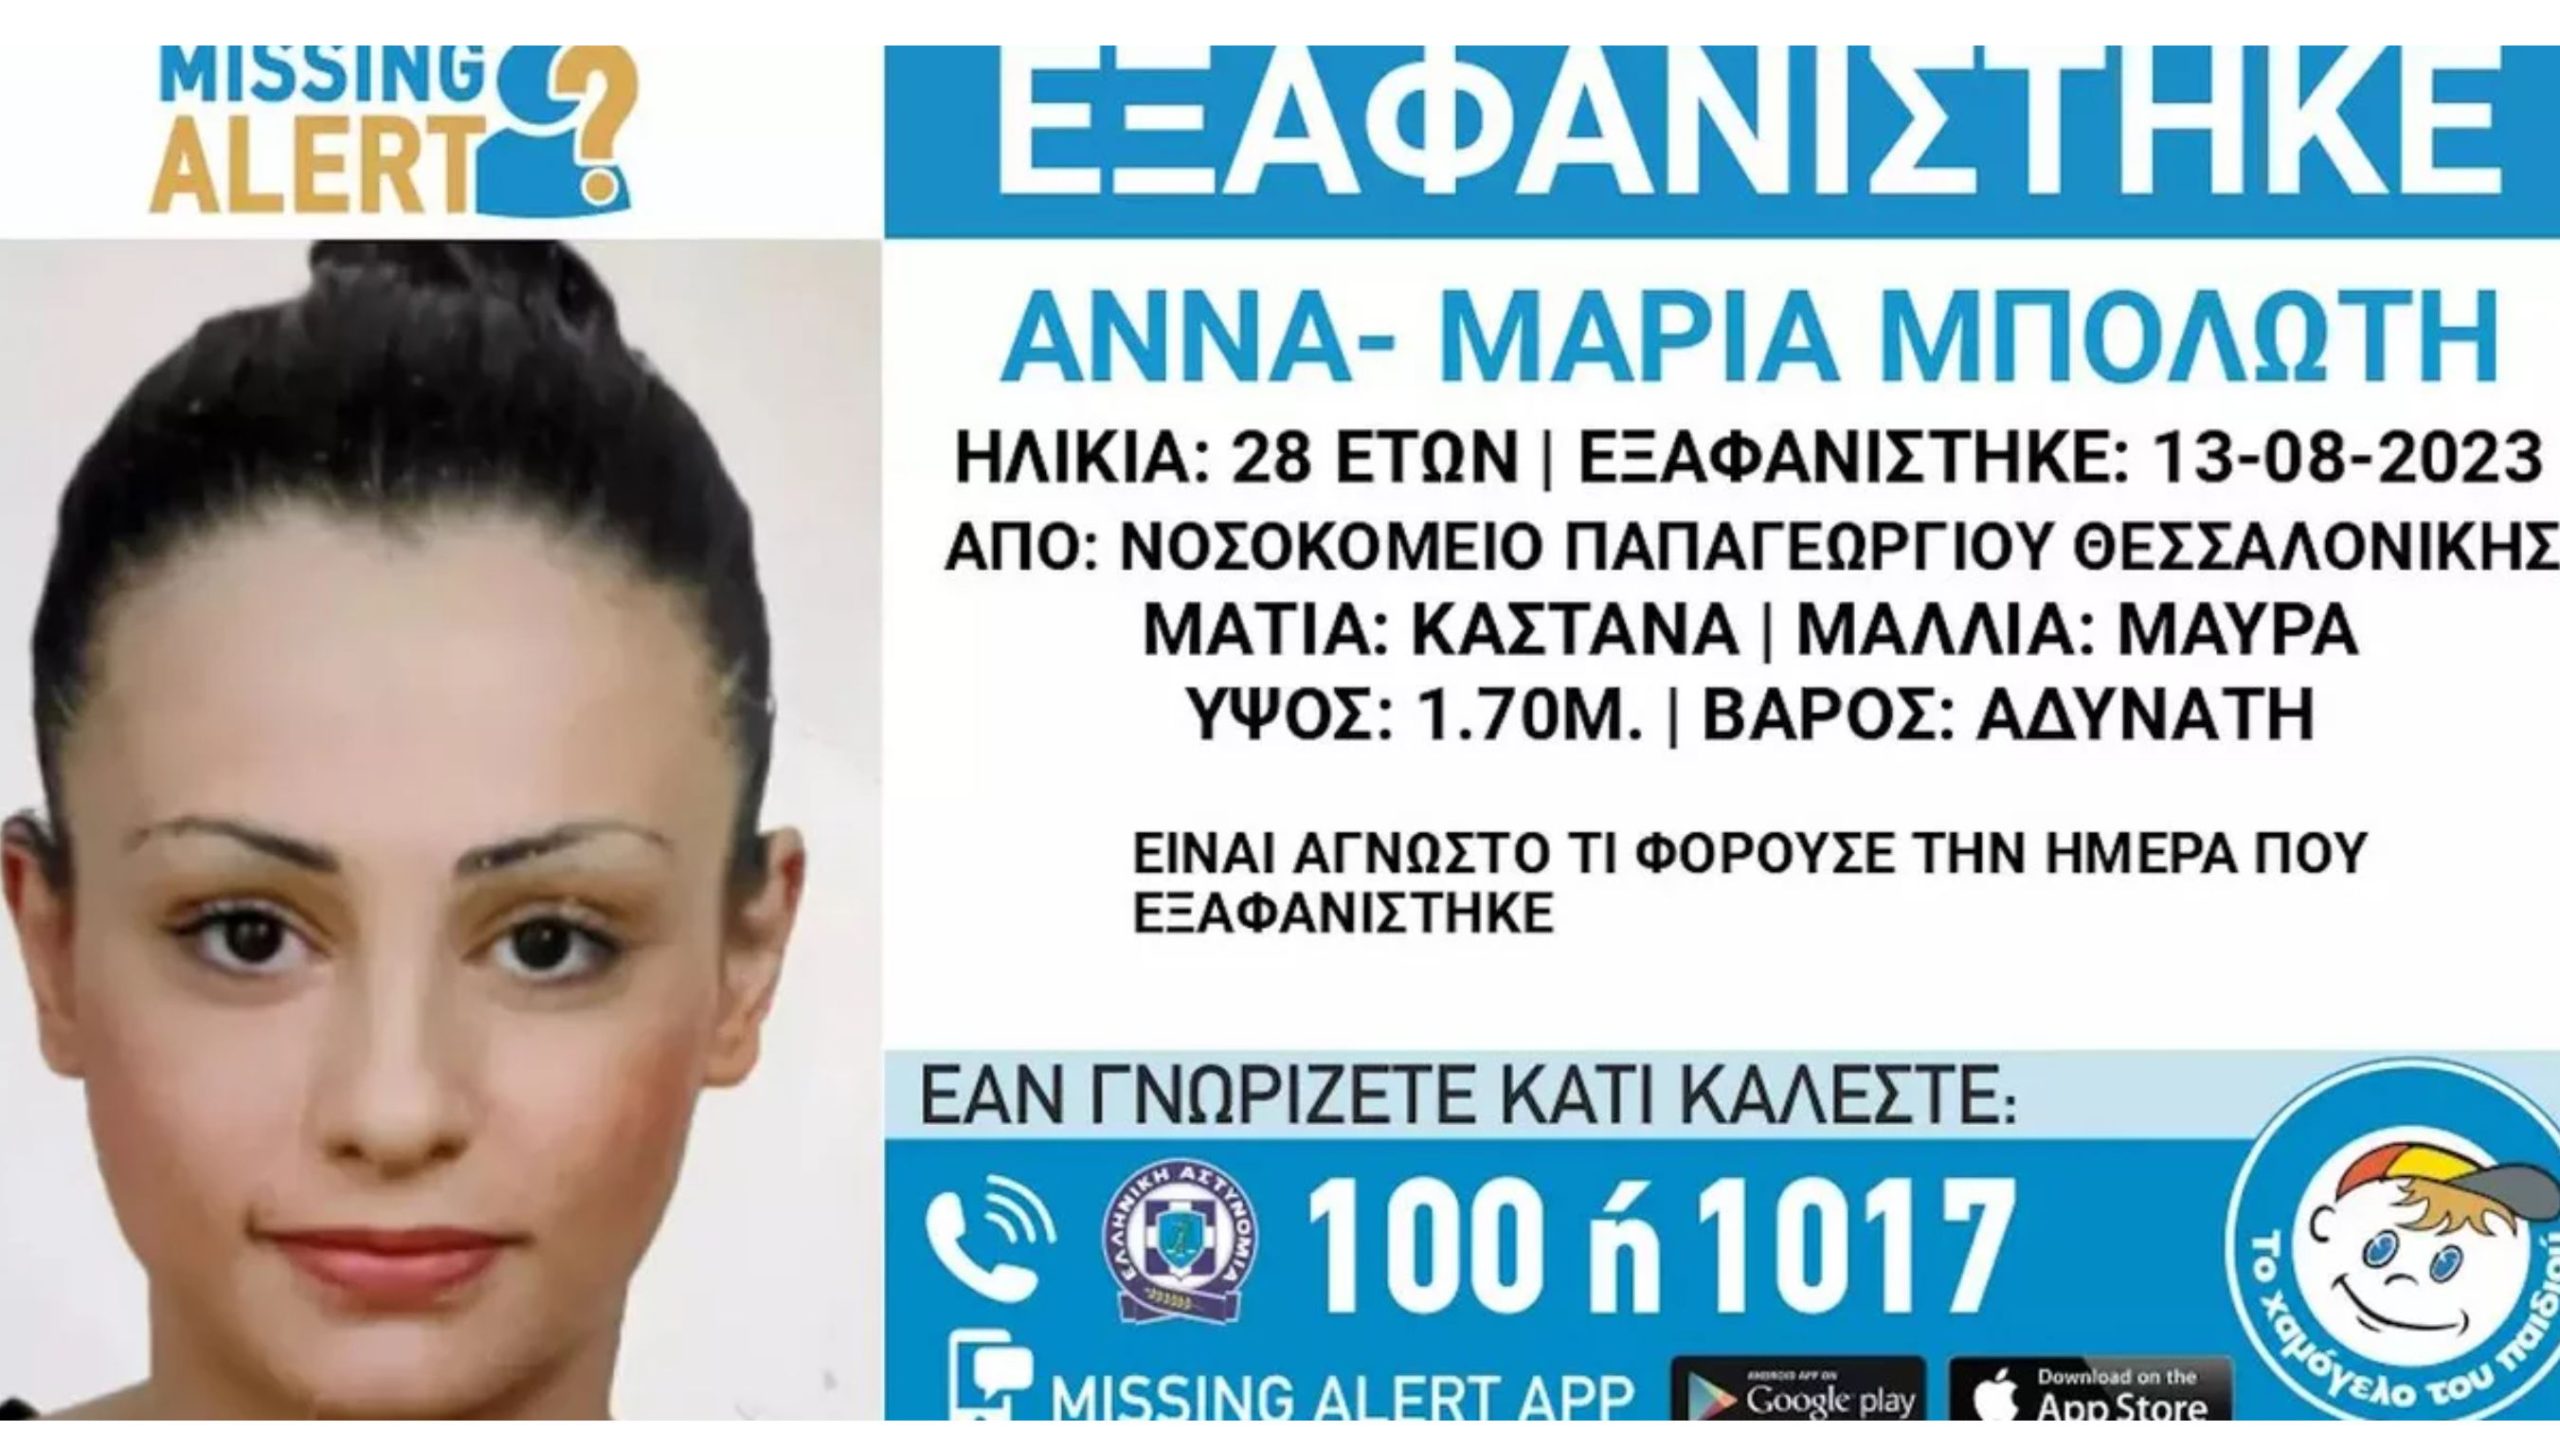 Missing Alert: Εξαφανίστηκε 28χρονη από το νοσοκομείο «Παπαγεωργίου» στη Θεσσαλονίκη